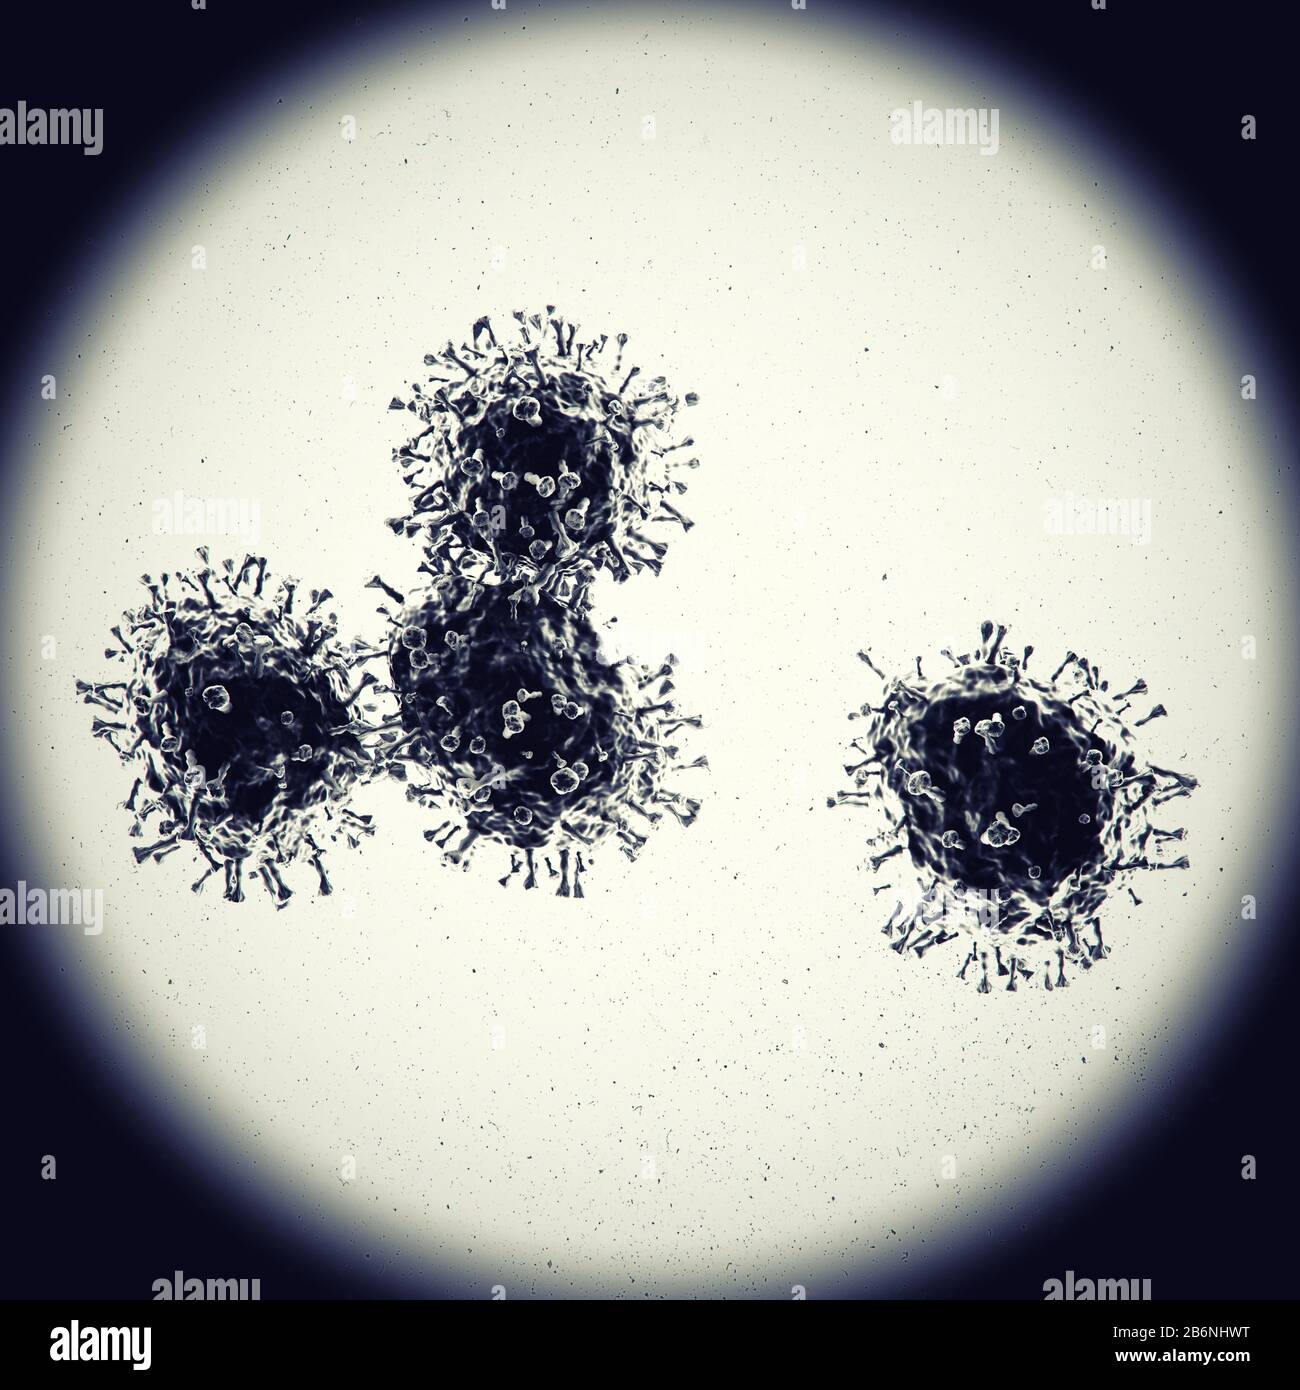 Corona virus under microscope, 3D render Stock Photo